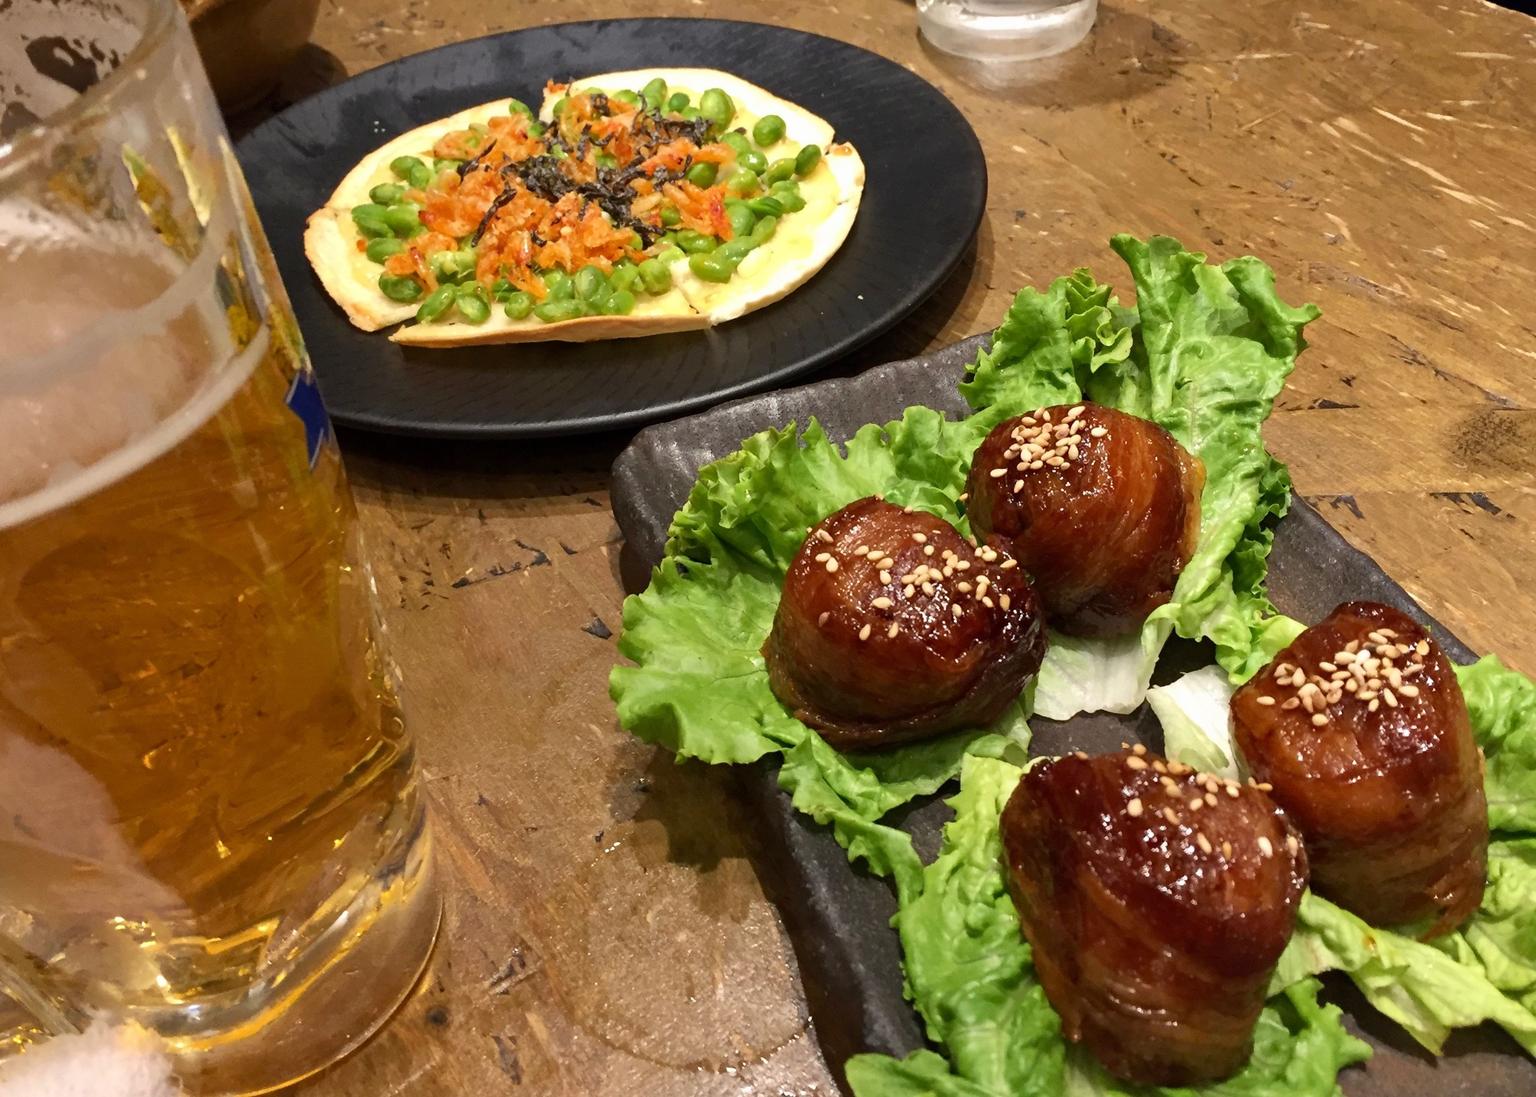 food tour in tokyo japan